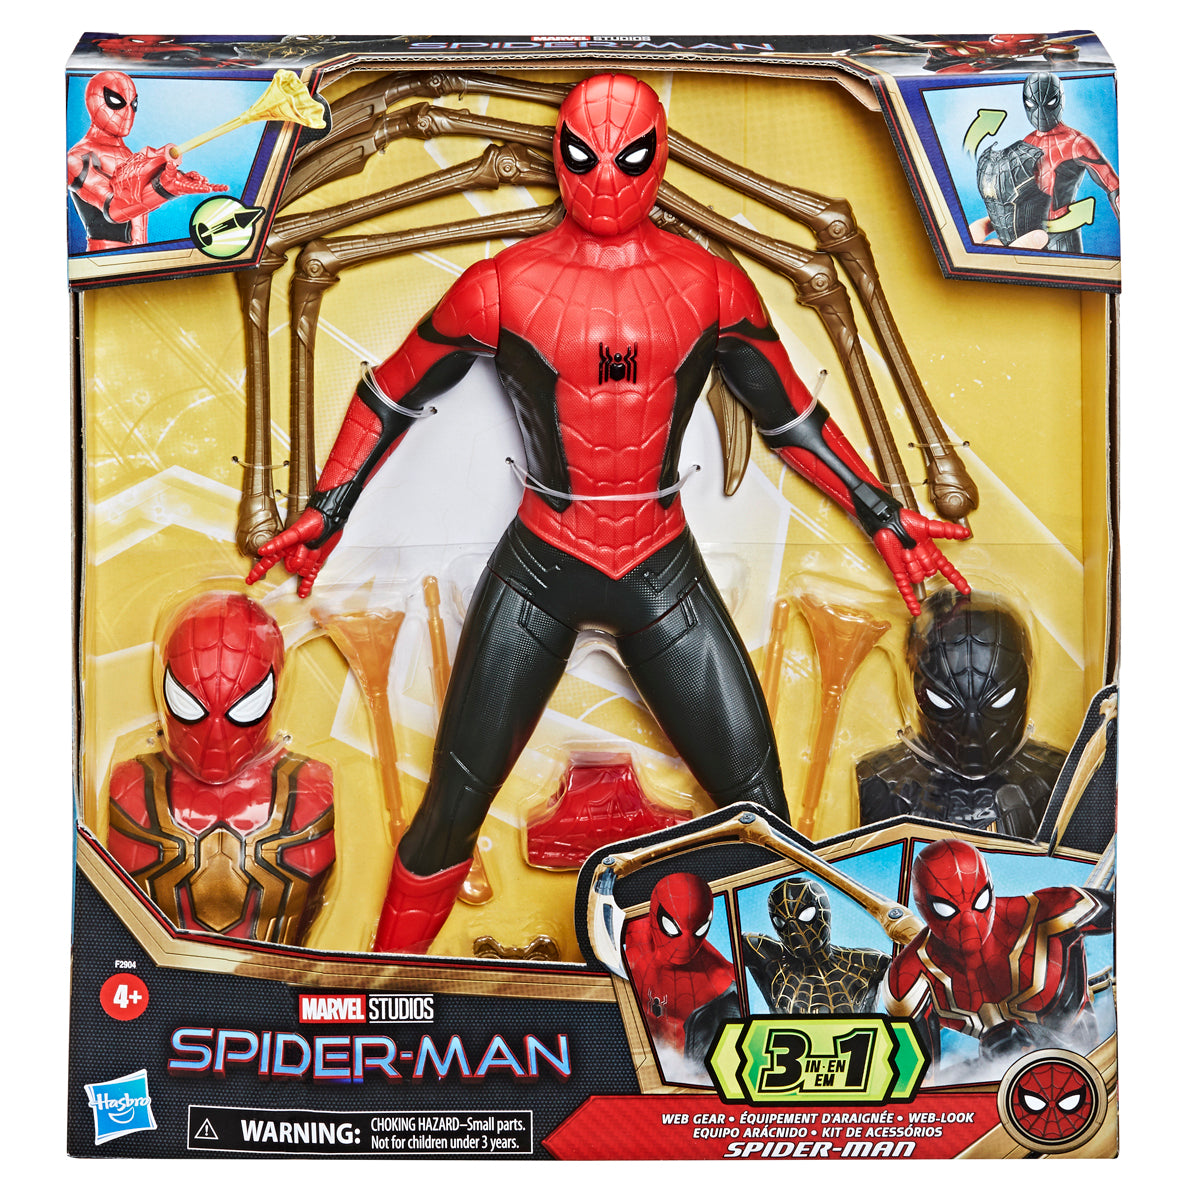 Shop for Spiderman, Toys & Games, Kids